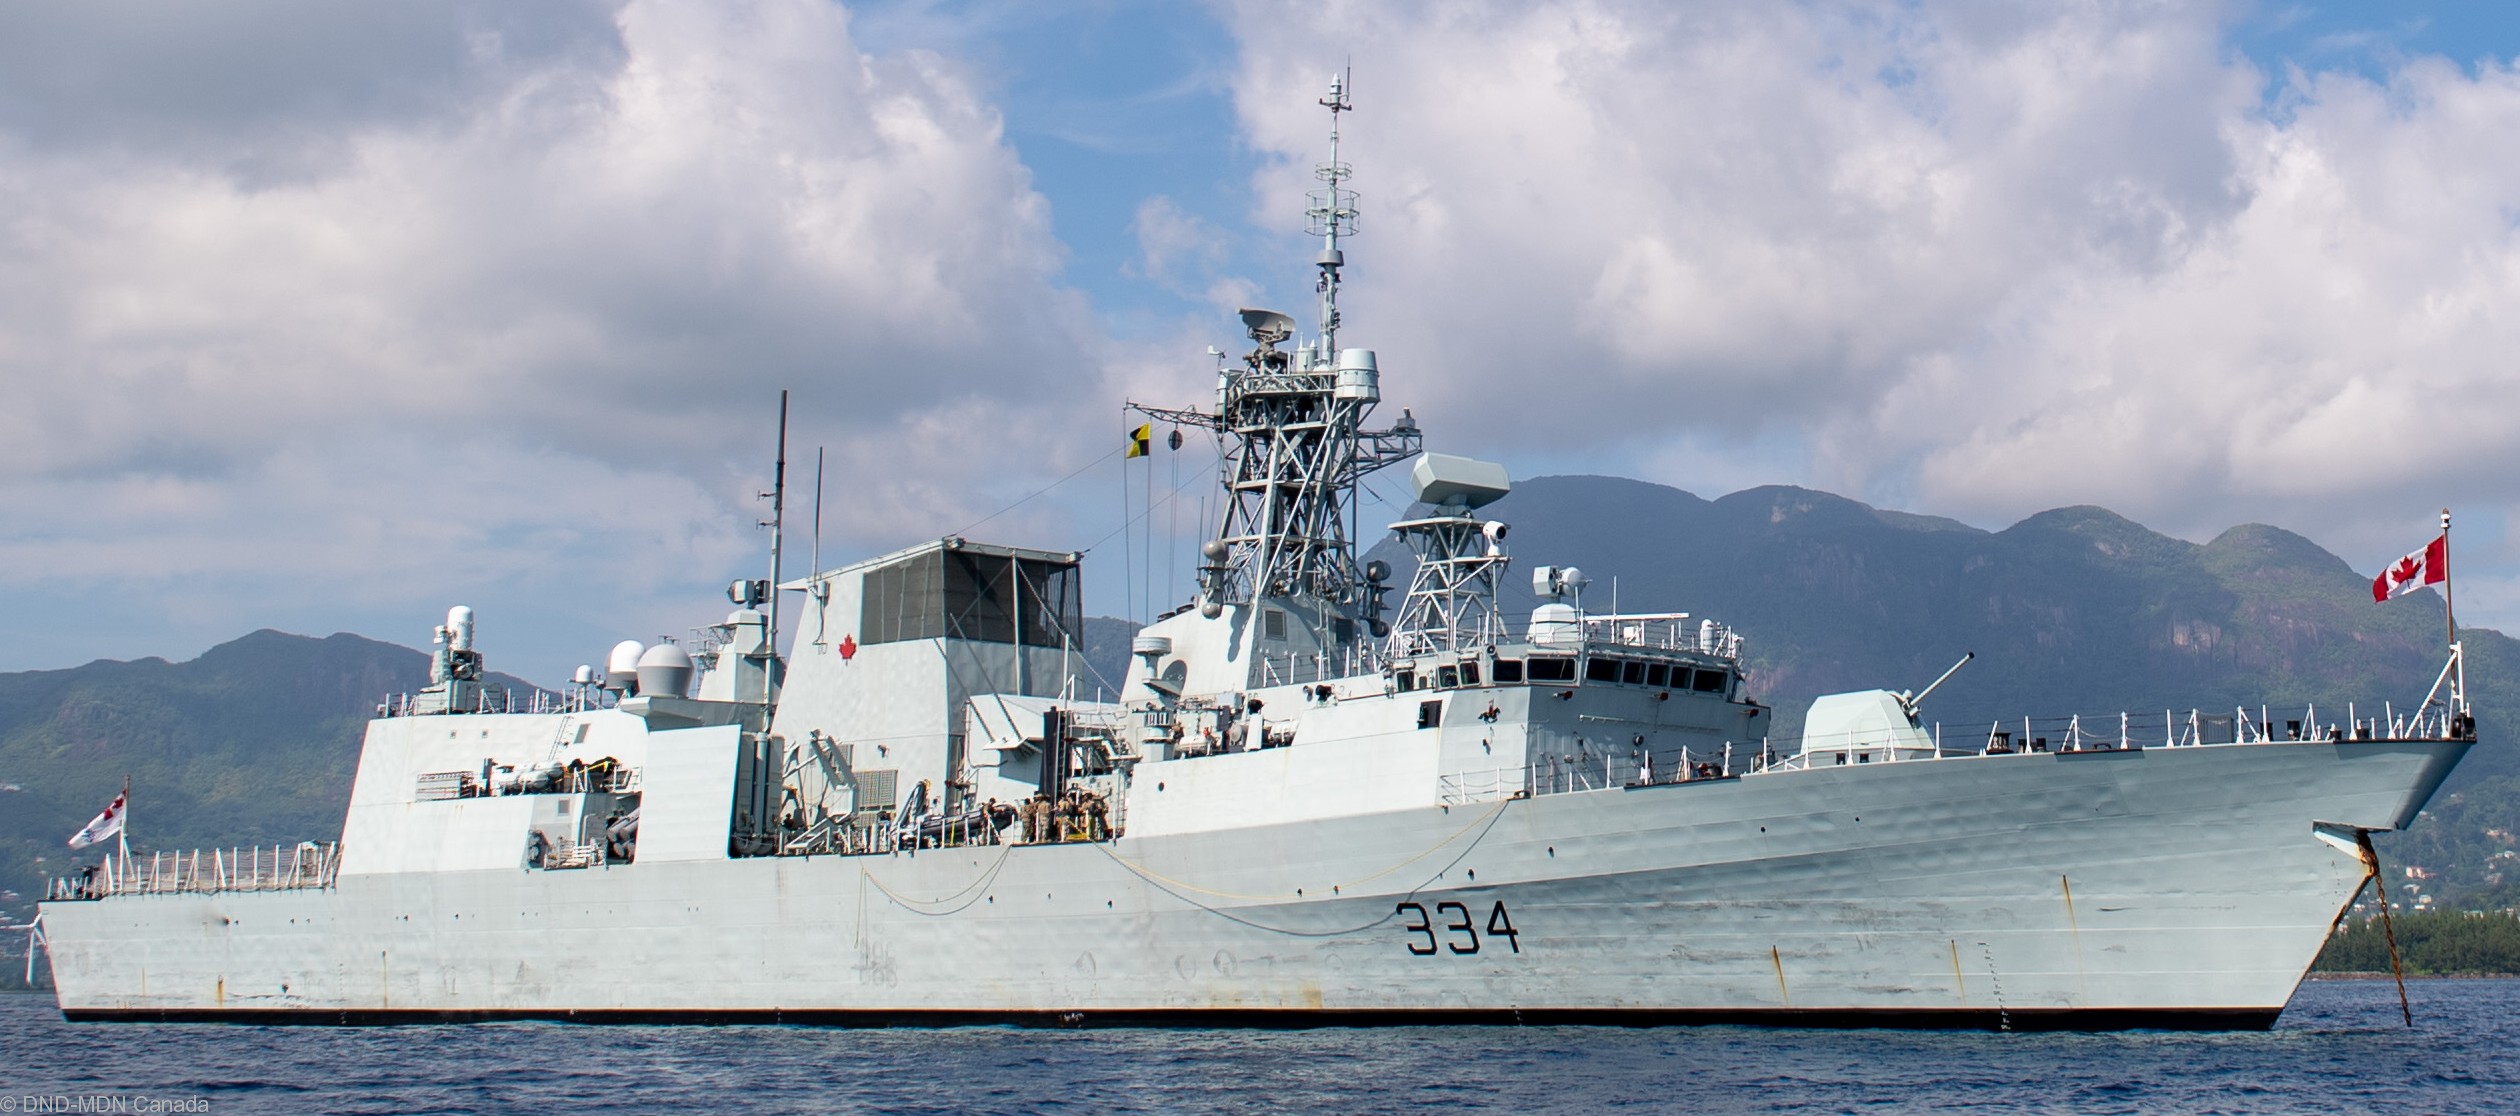 ffh-334 hmcs regina halifax class helicopter patrol frigate ncsm royal canadian navy 40